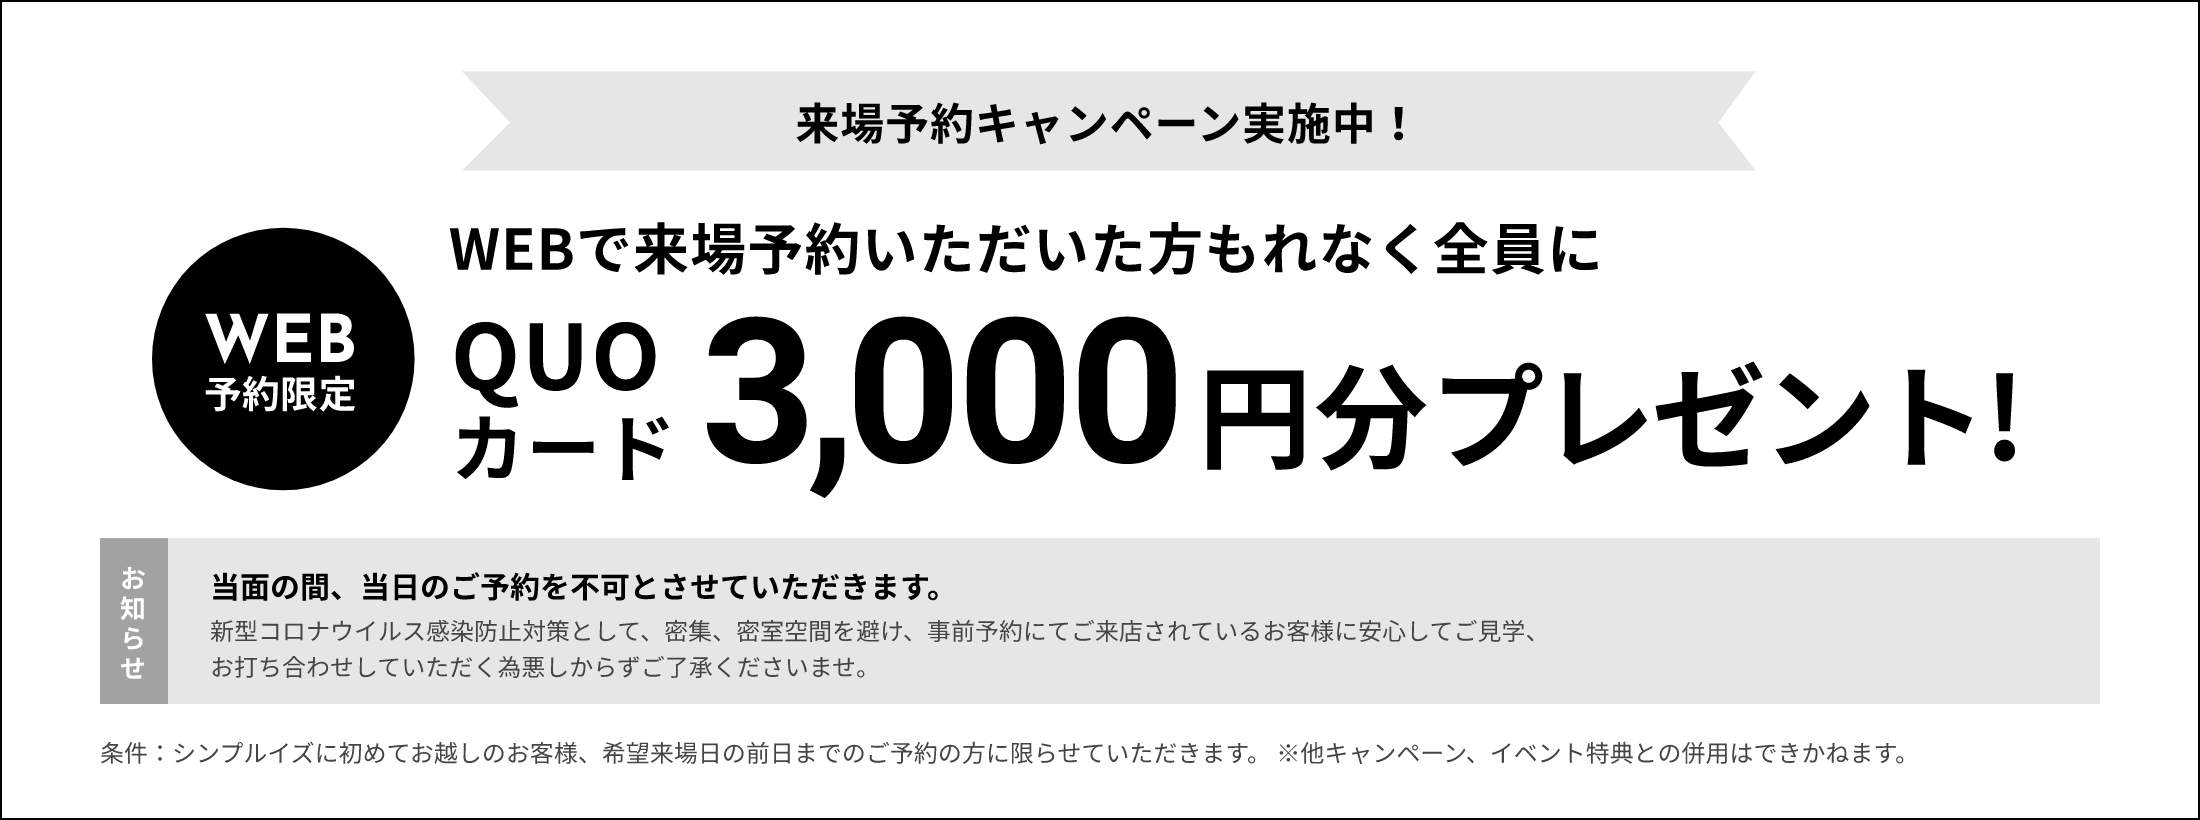 WEB予約限定 QUOカード1,000円分プレゼント!